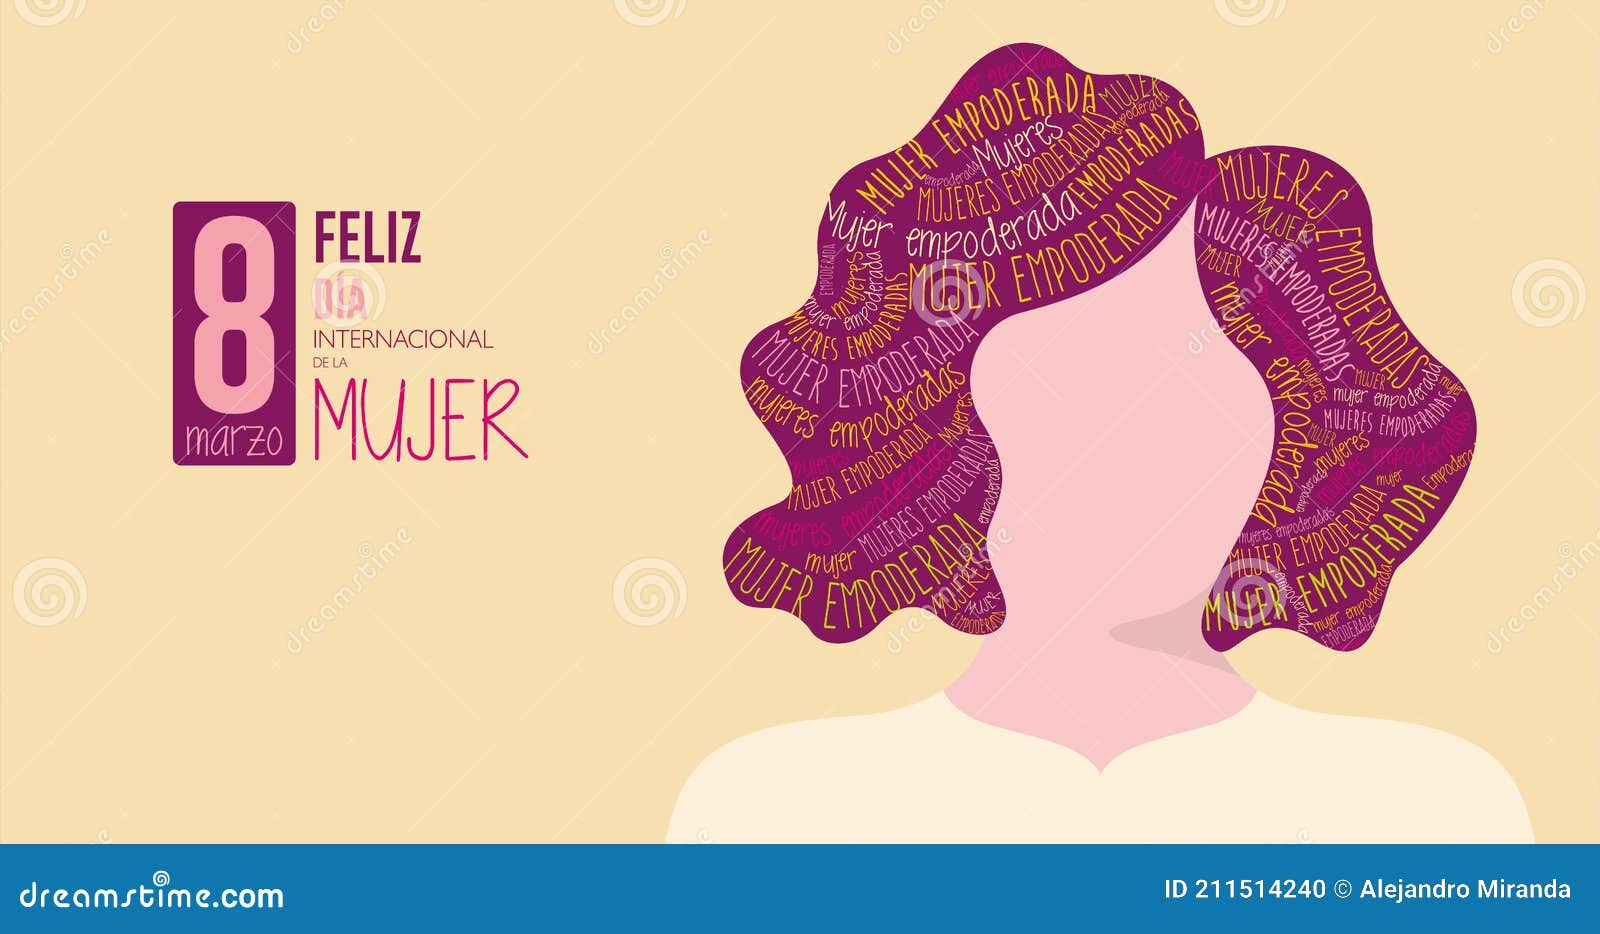 feliz dia international de la mujer - happy international women s day in spanish language silhouette of woman with purple hair